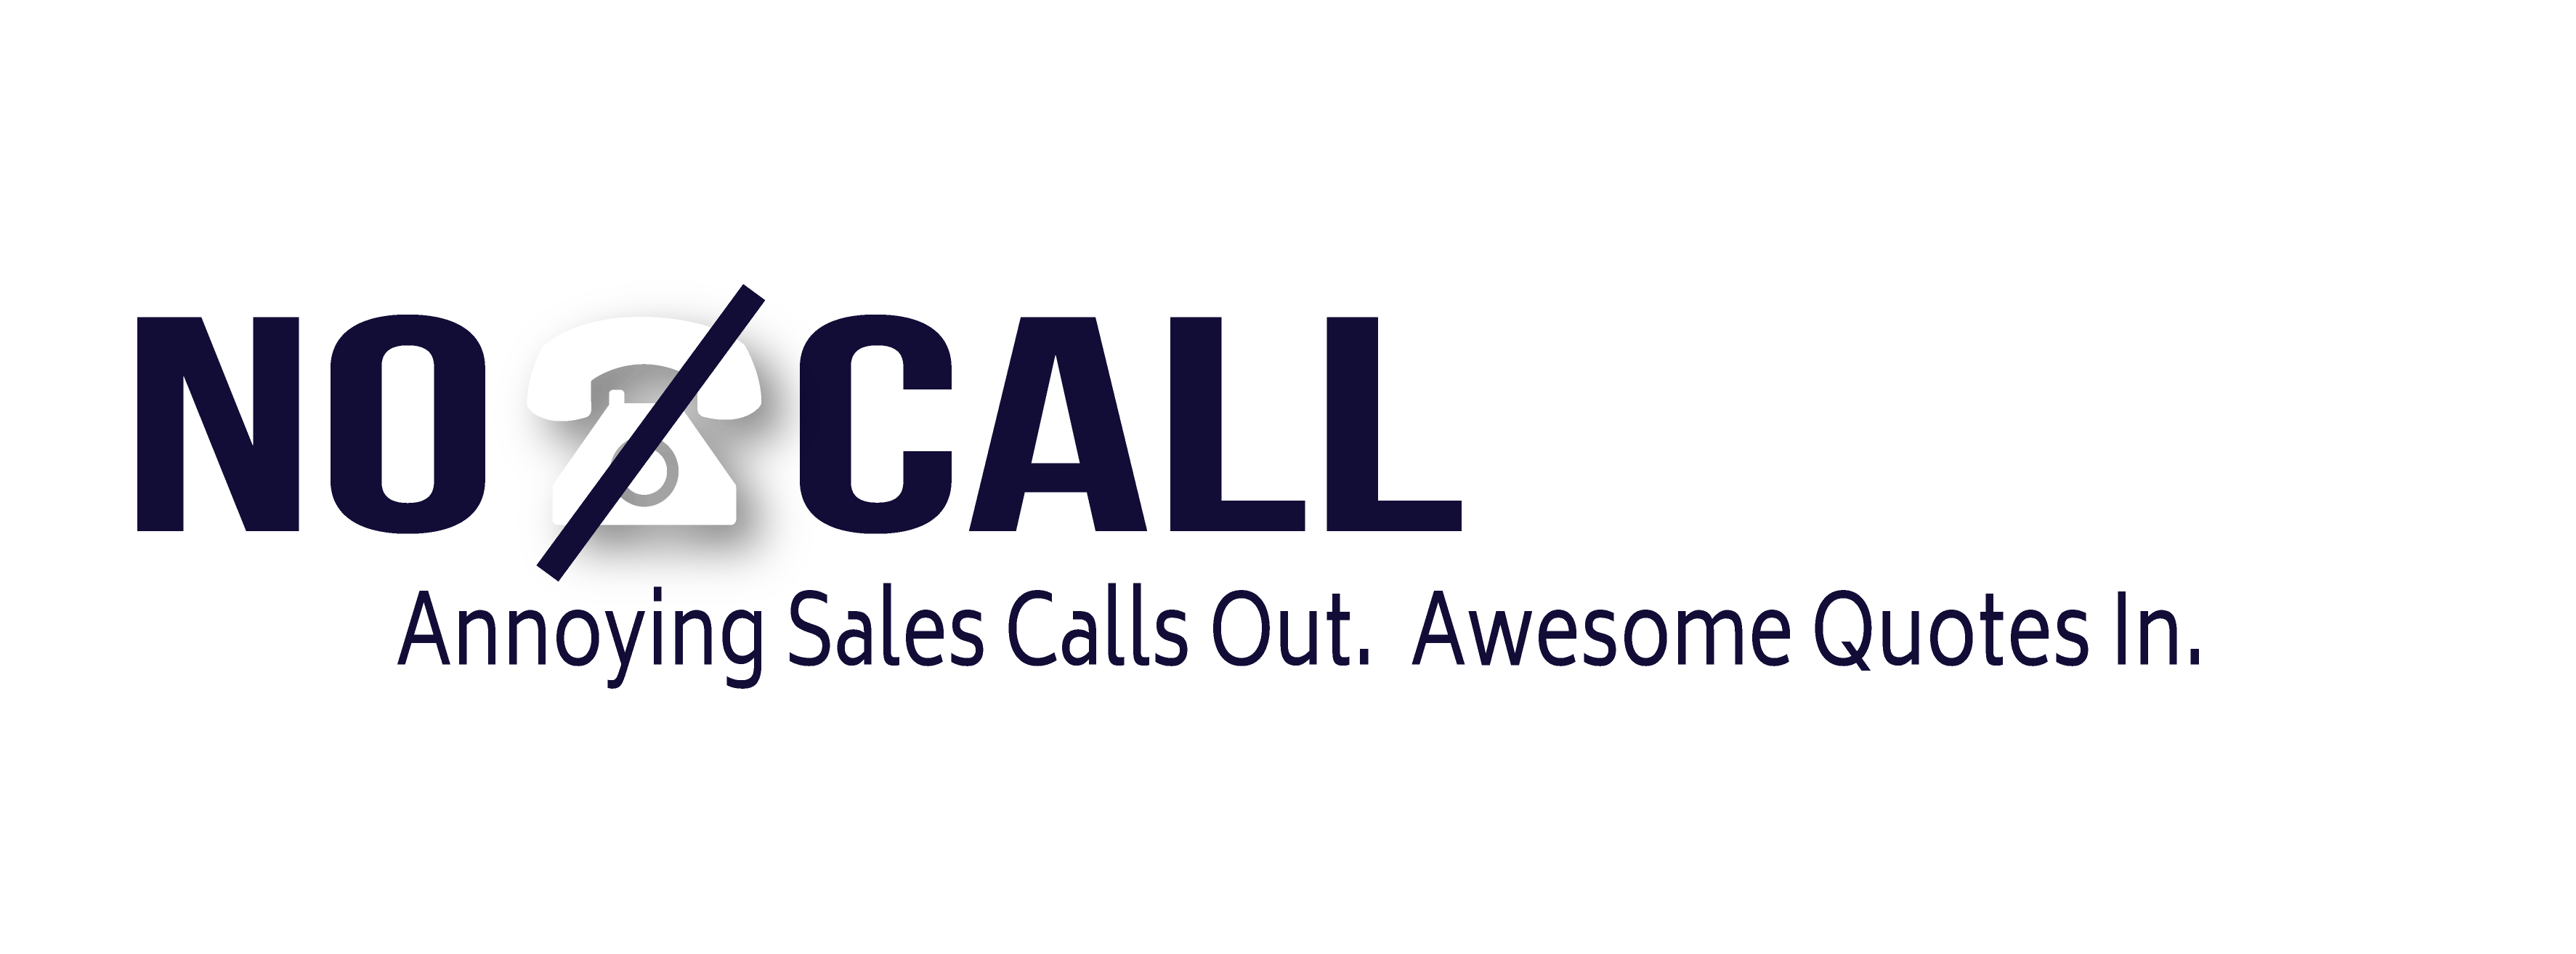 No Calls Logo - no call insurance quote